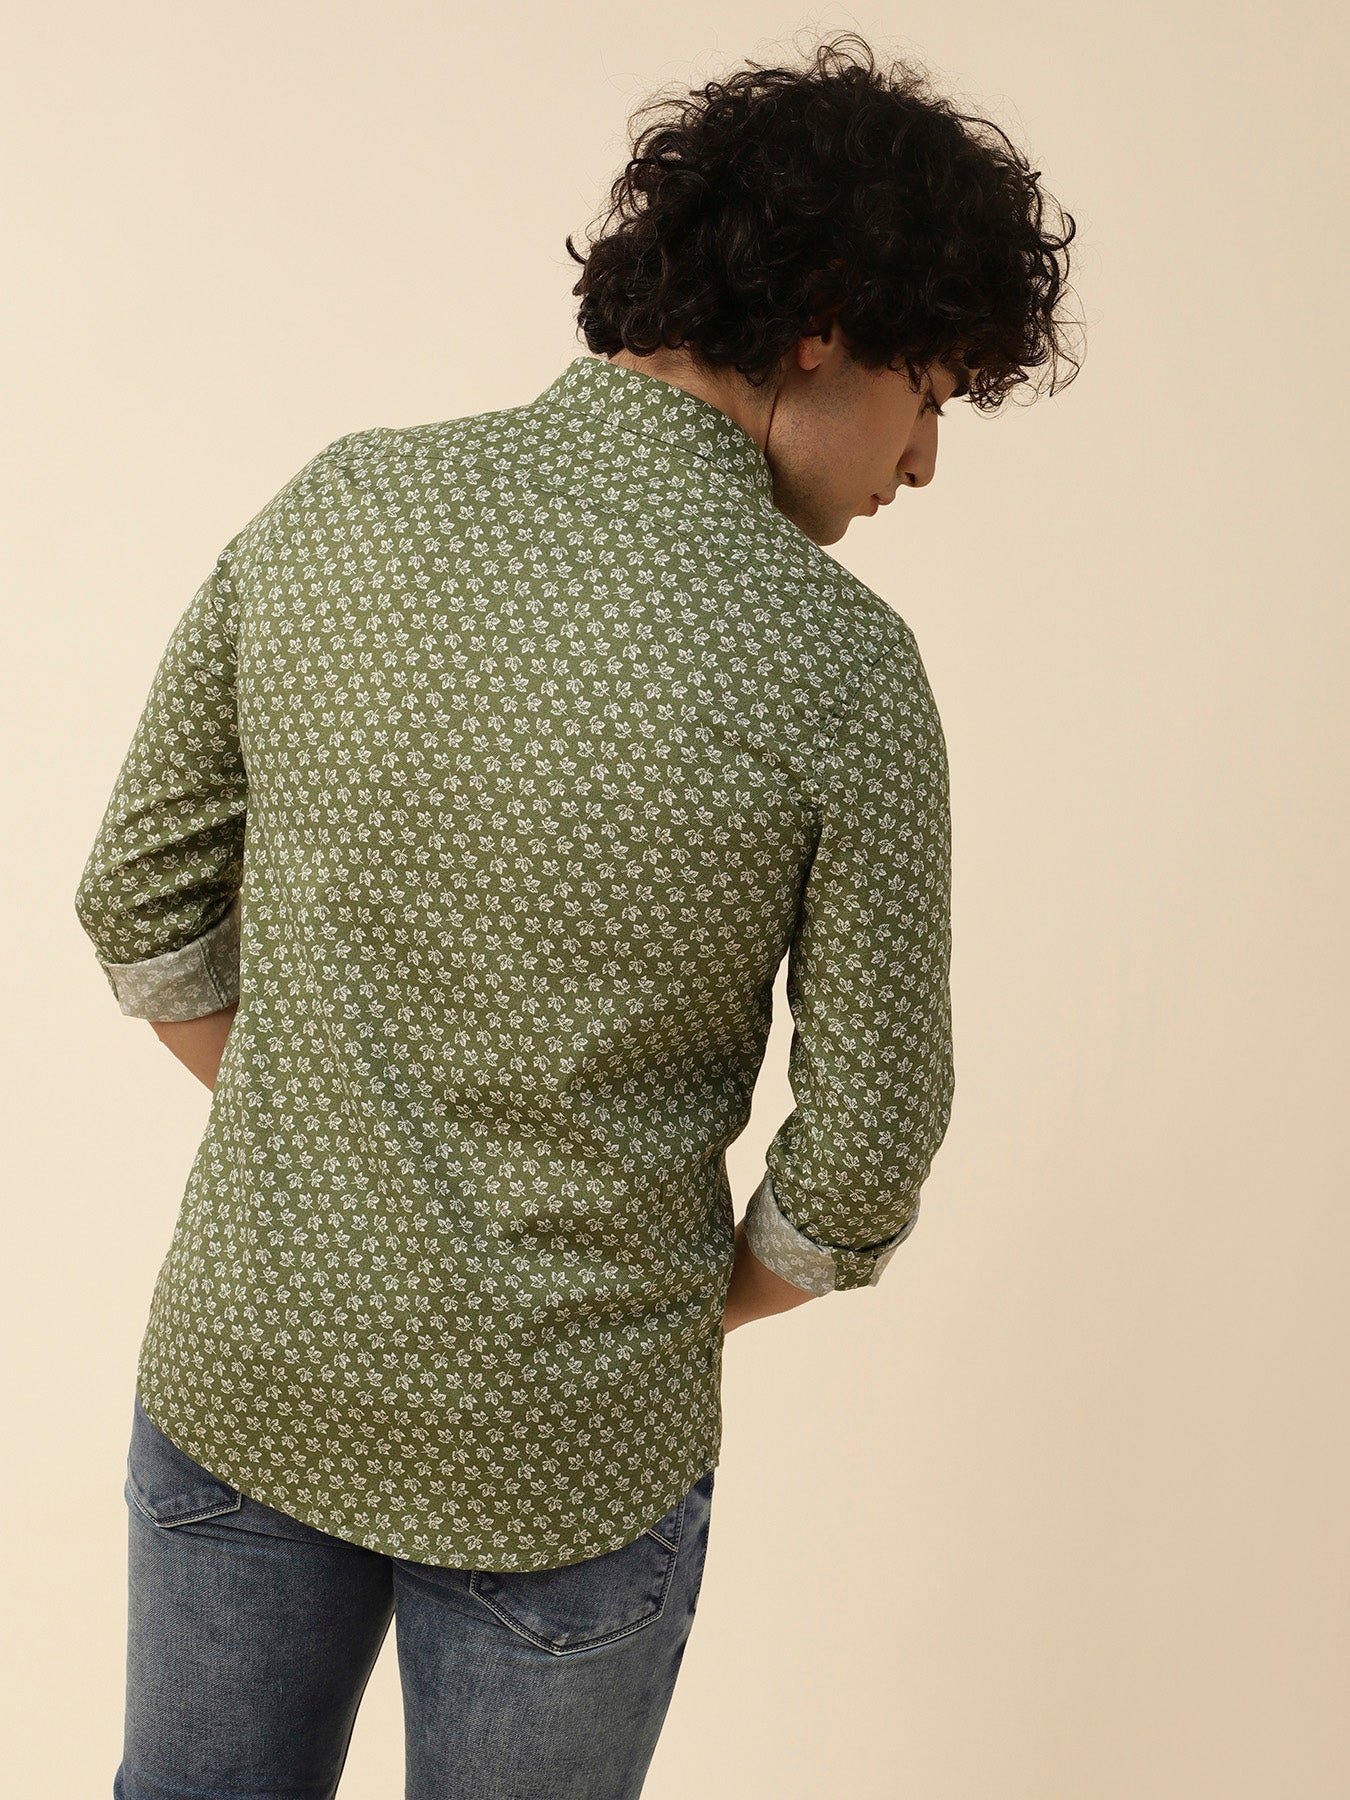 Cotton Green Checkered Full Sleeve Casual Shirt